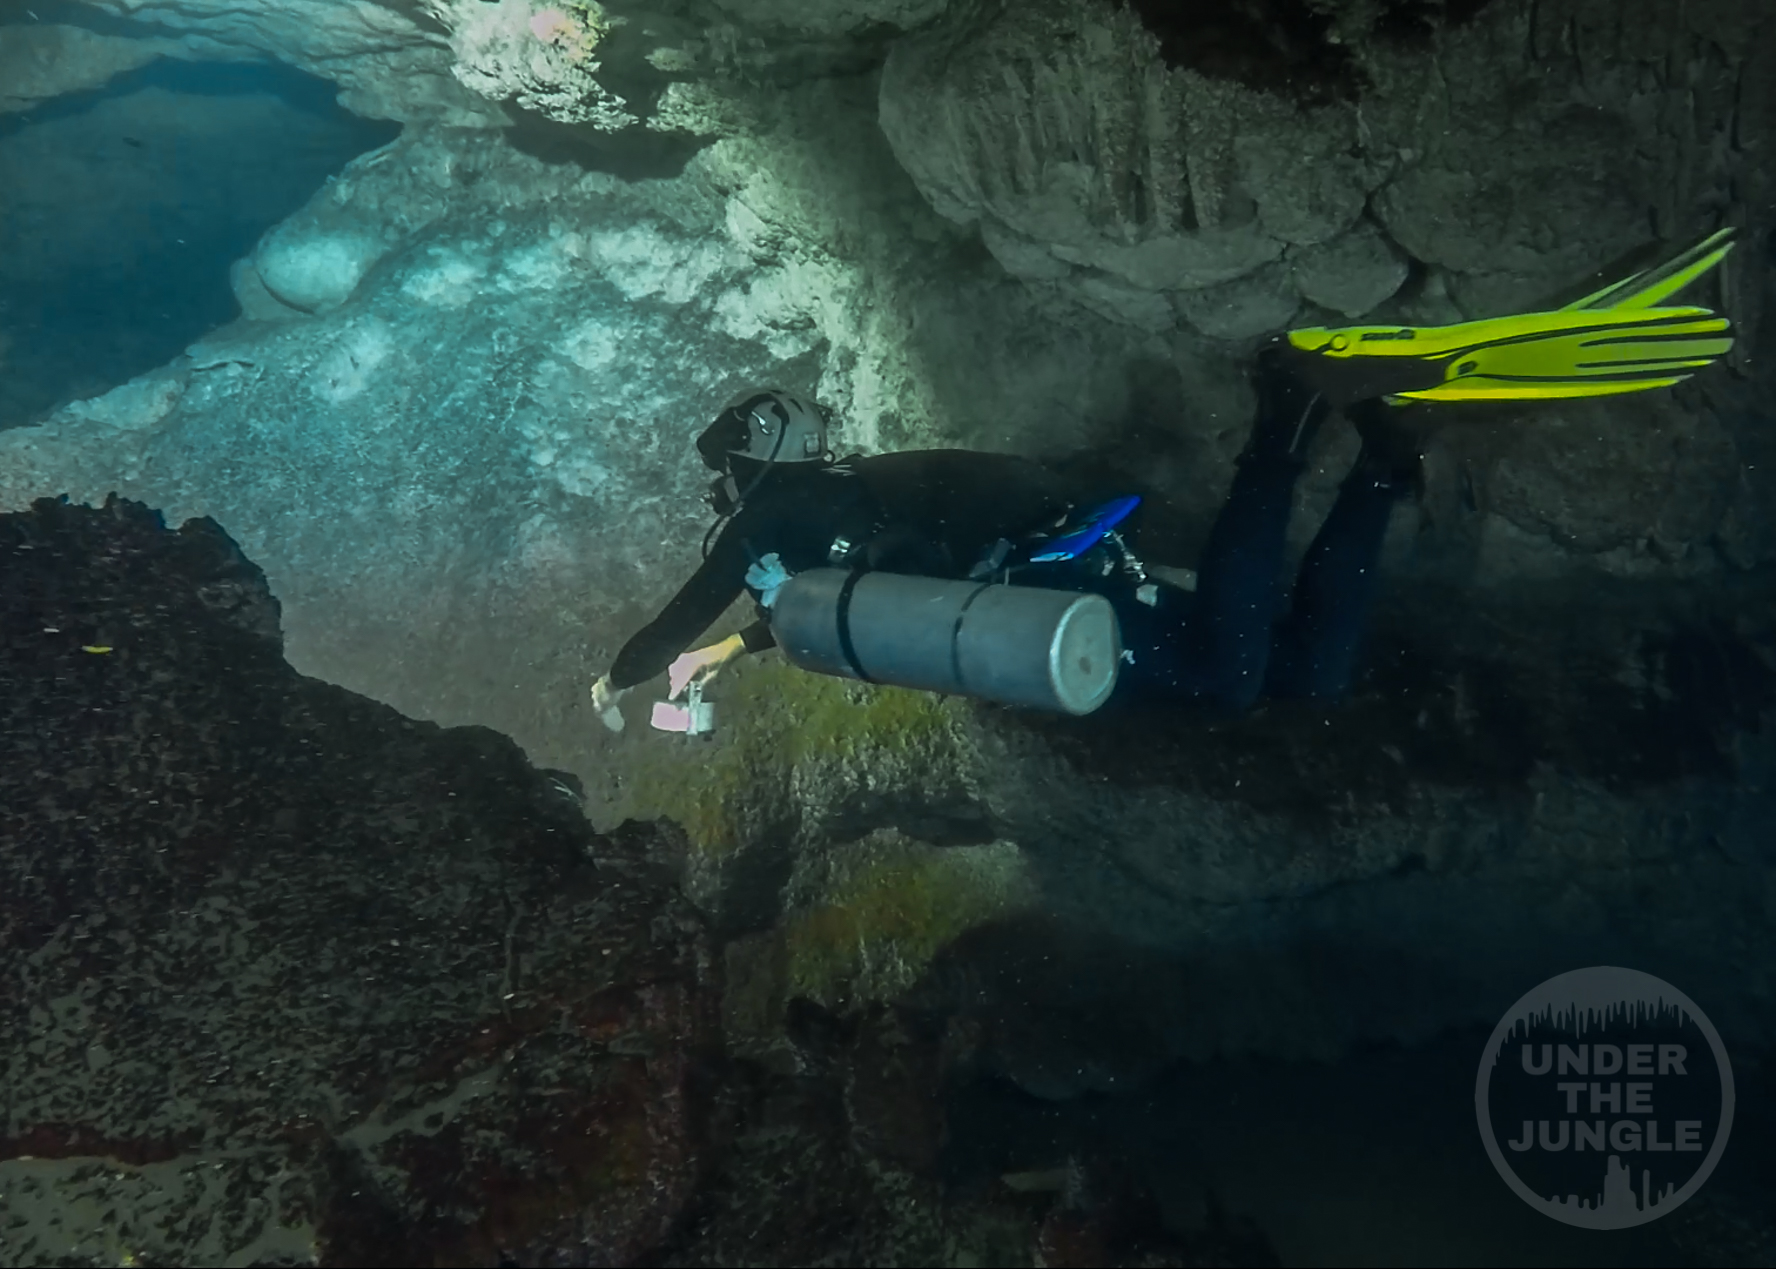 Under the Jungle, Yucatan Cave Diving, Yucatan Sinkholes, Sinkhole Diving, Cave Diving Mexico